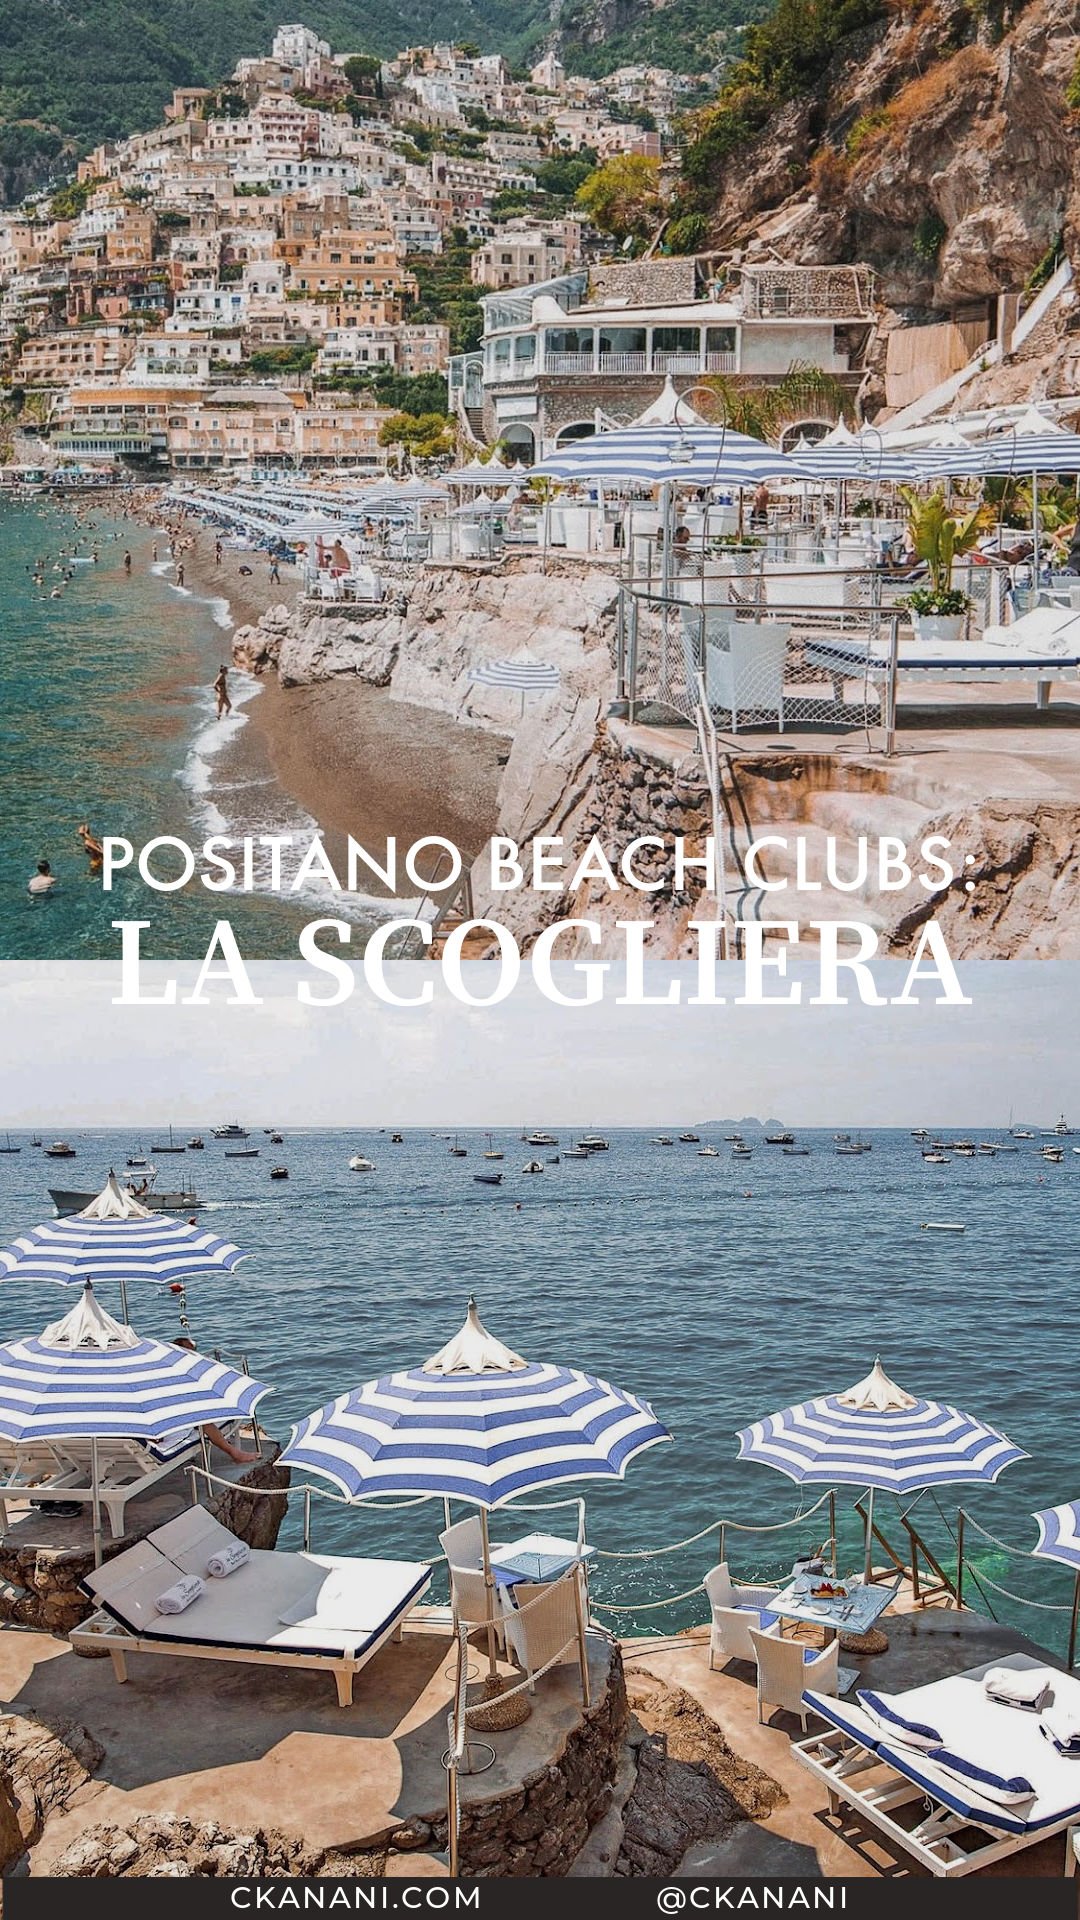 ckanani-beaches-in-positano-beach-clubs-1.jpg